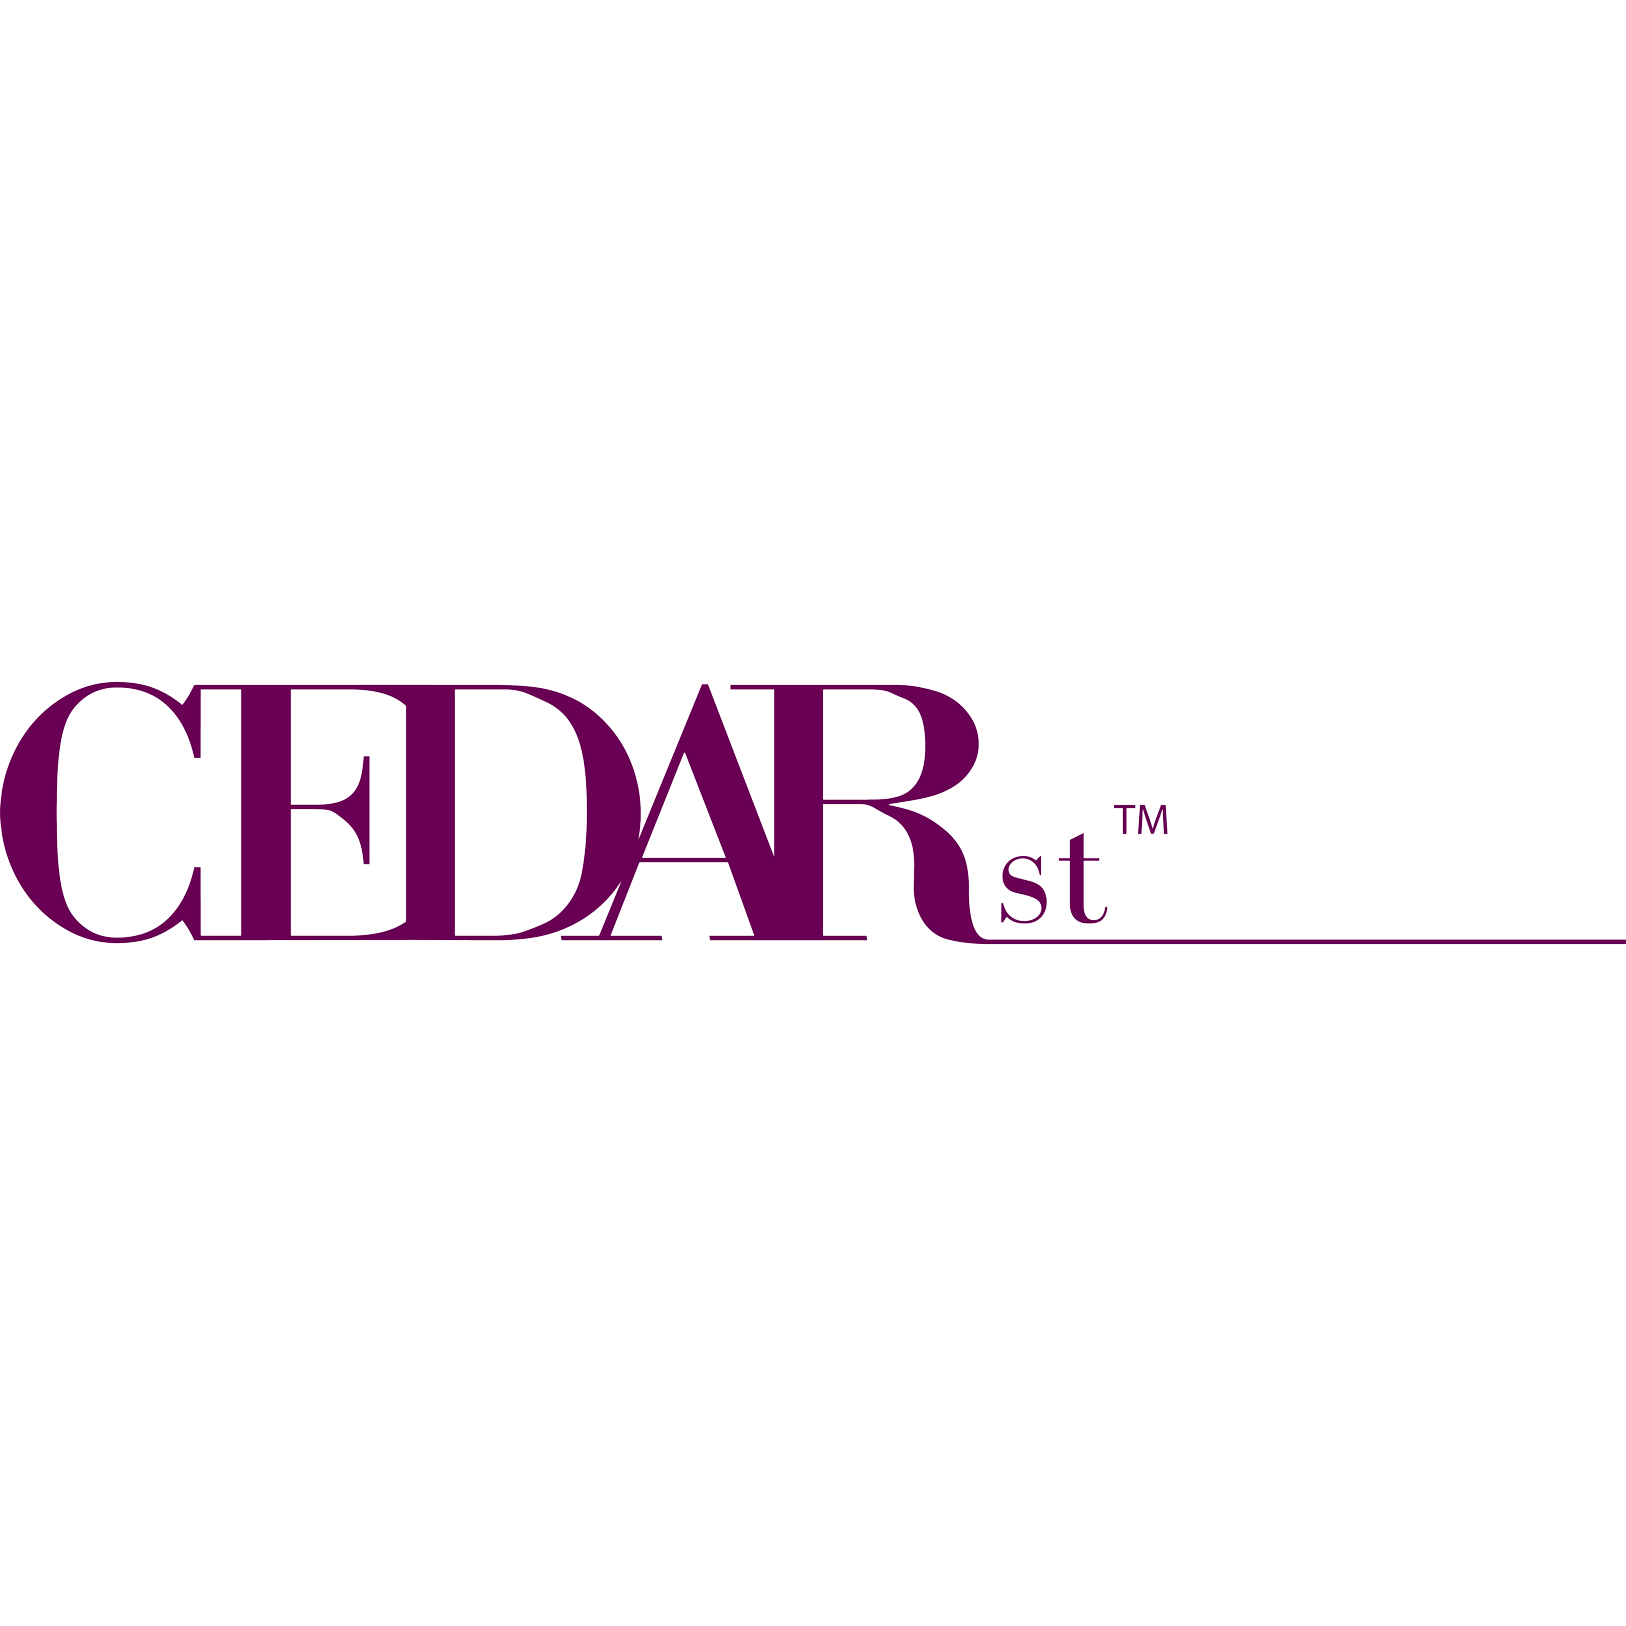 Cedar Street logo